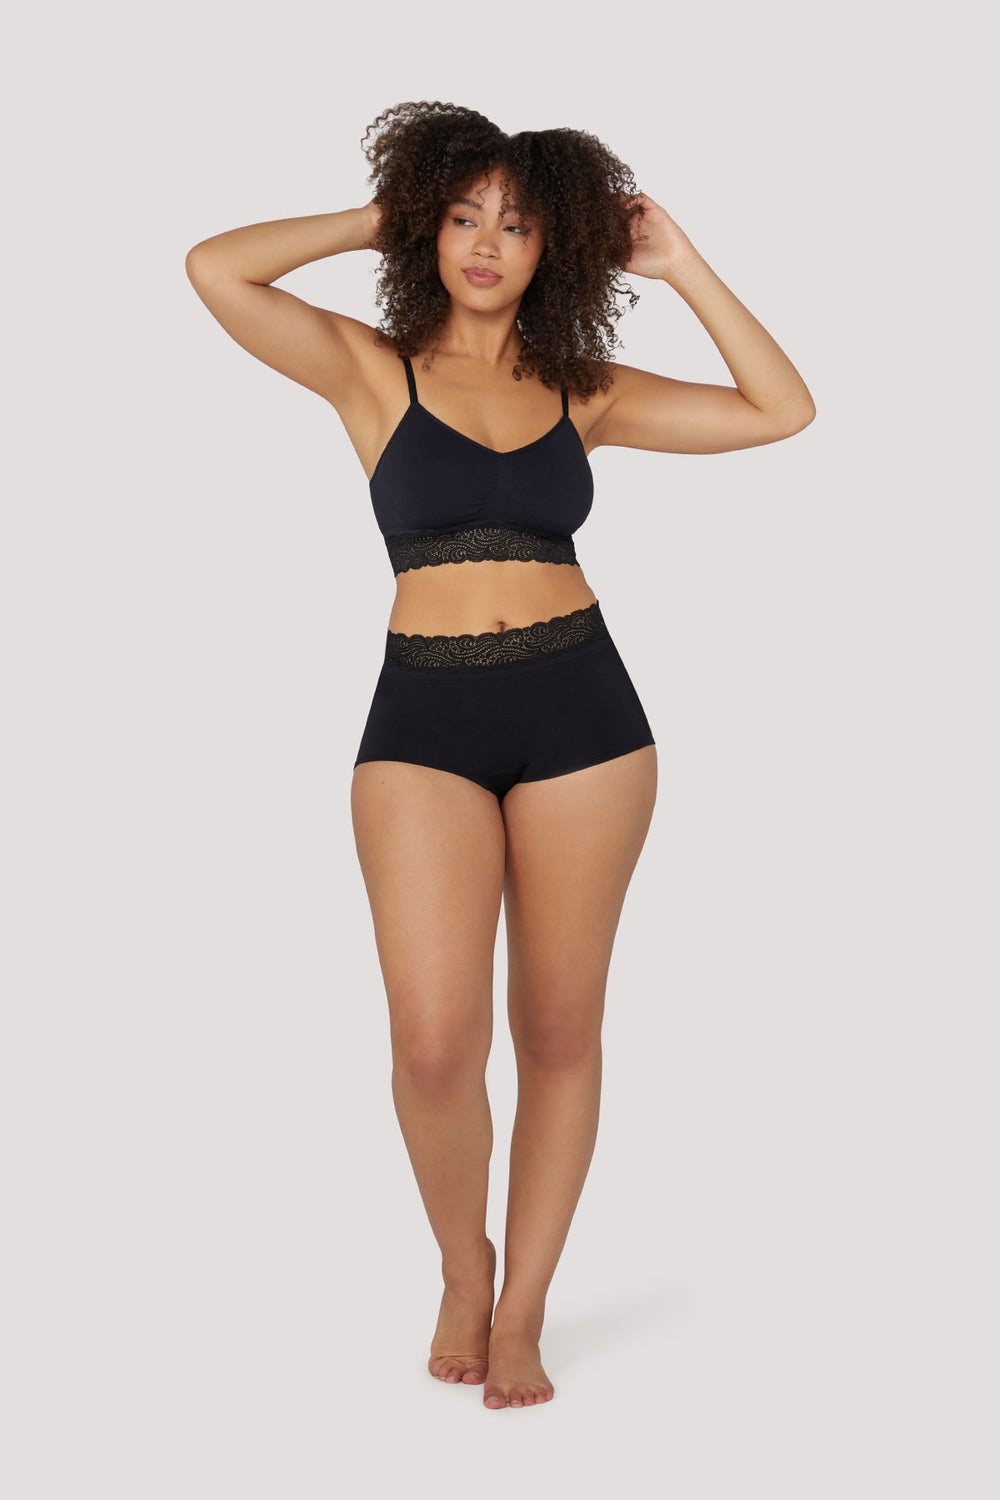 Lace Wireless Bra and Lace Boy Leg Underwear Set | Bella Bodies Australia | Black